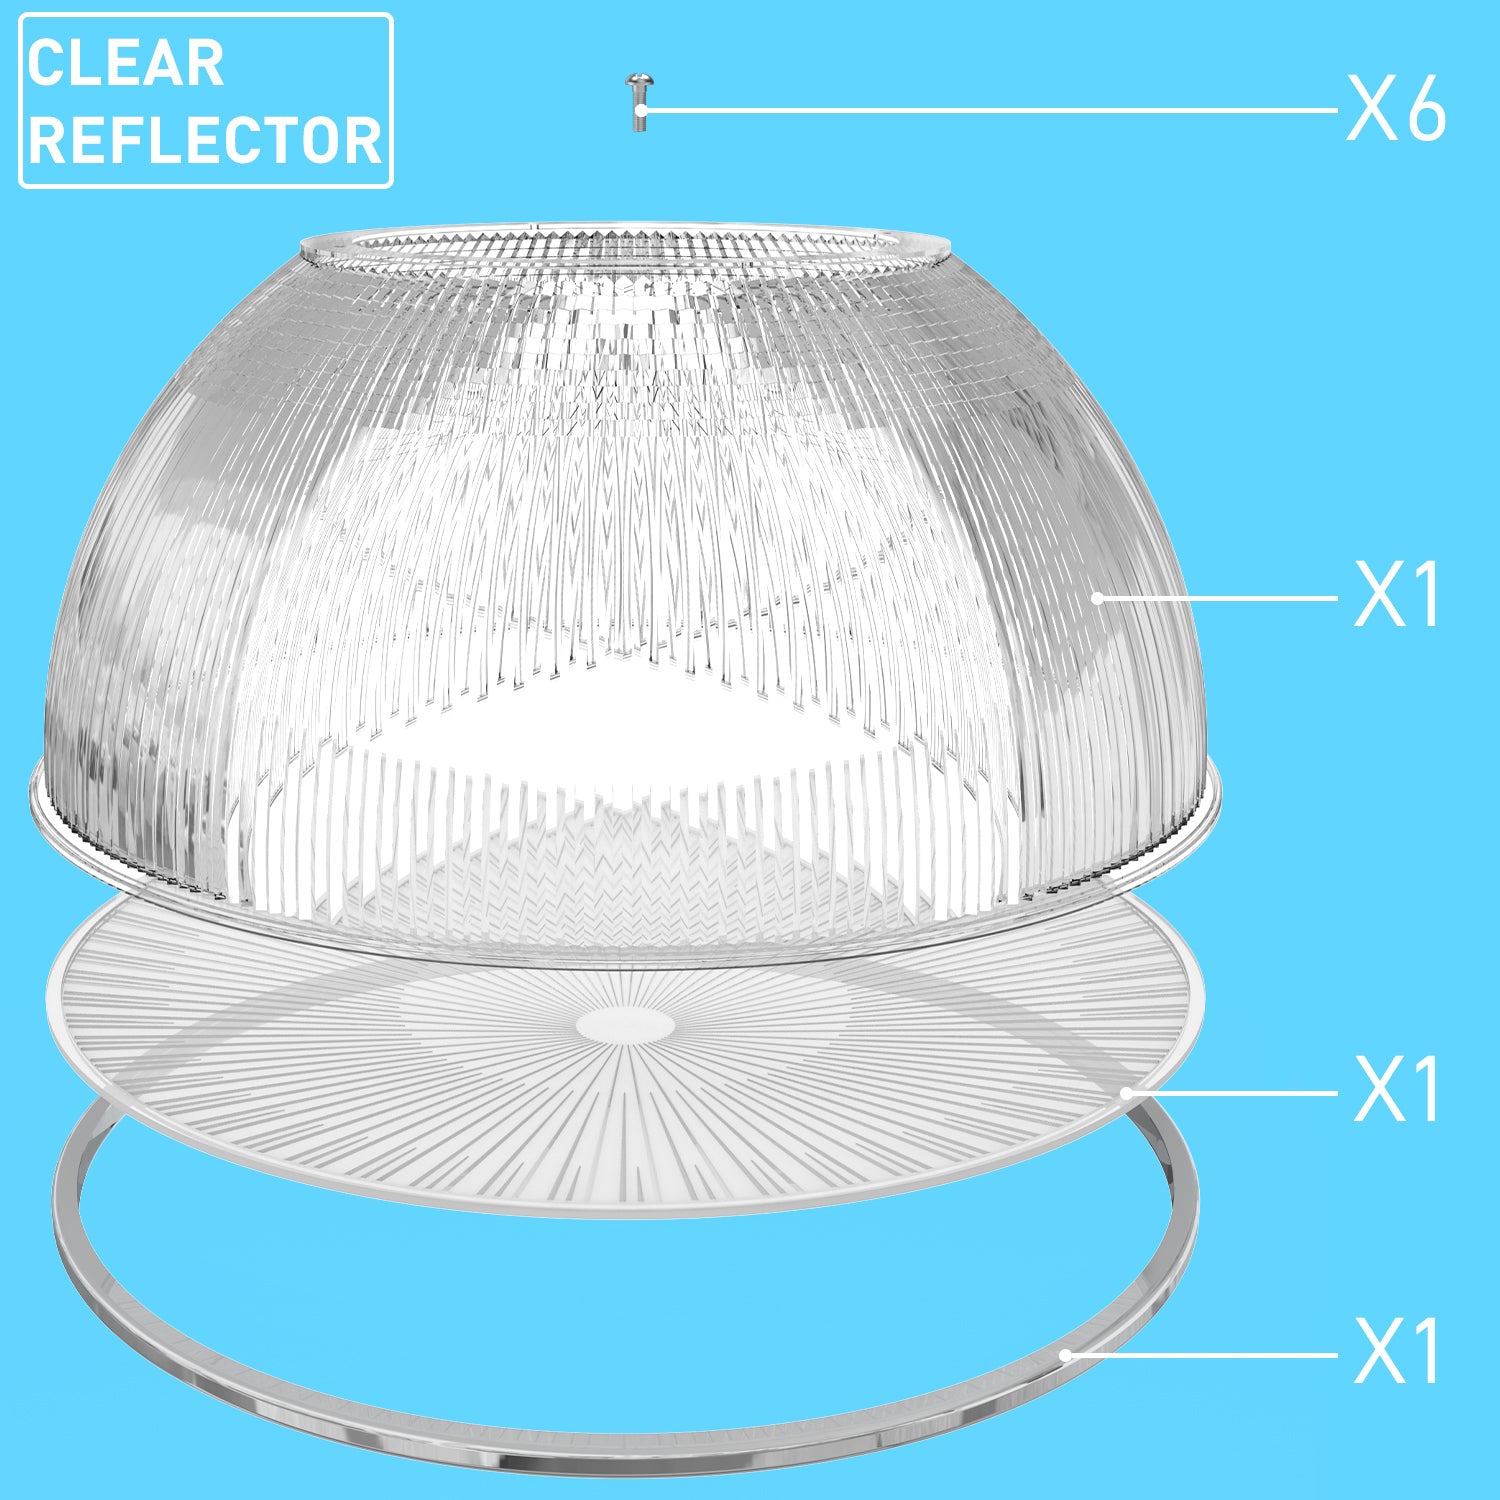 LED reflector, acrylic reflector